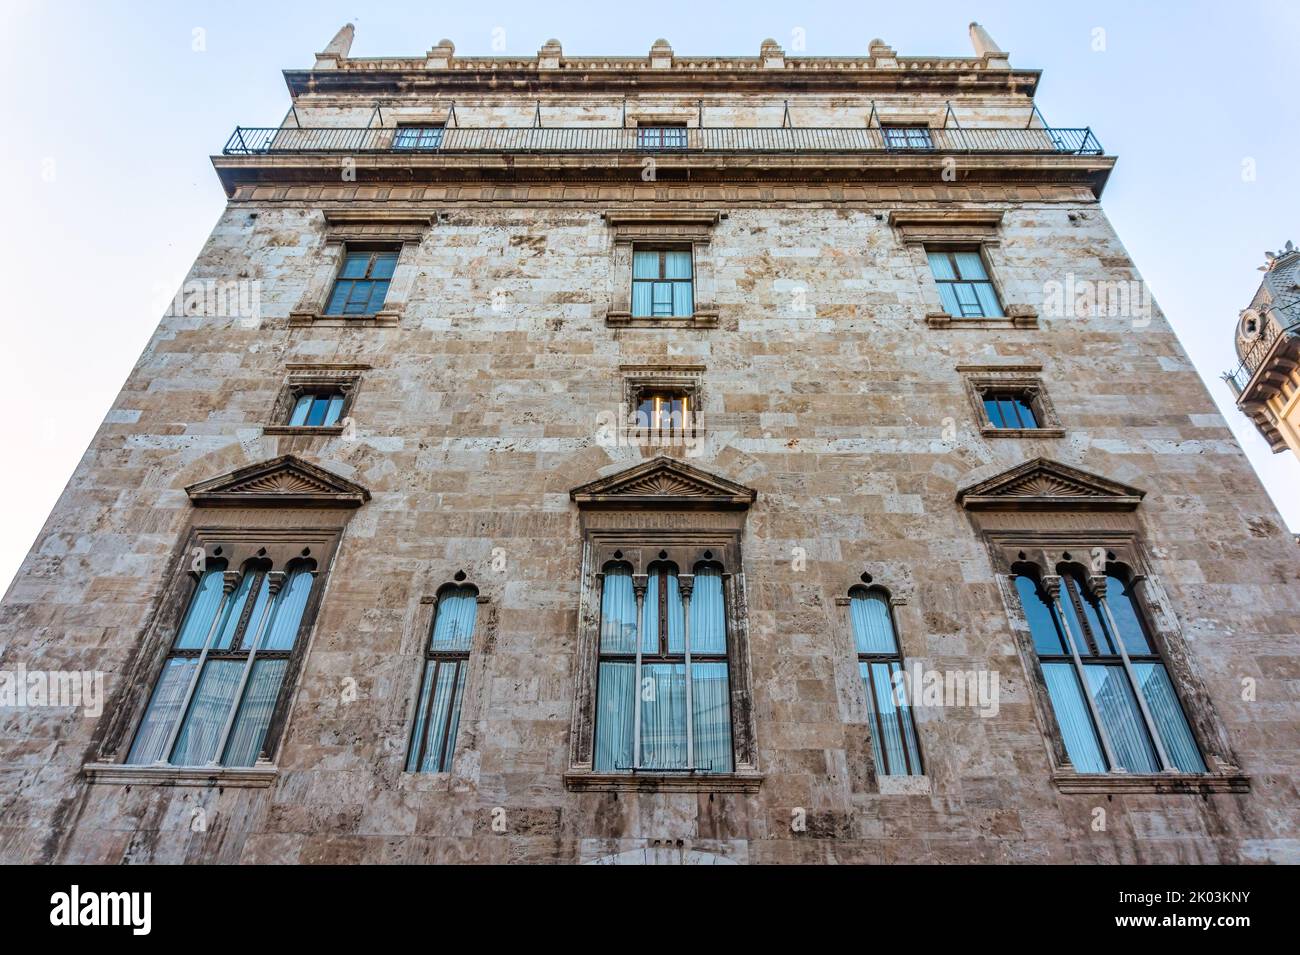 A medieval building occupied by the Palau de la Generalitat Valenciana, Spain Stock Photo